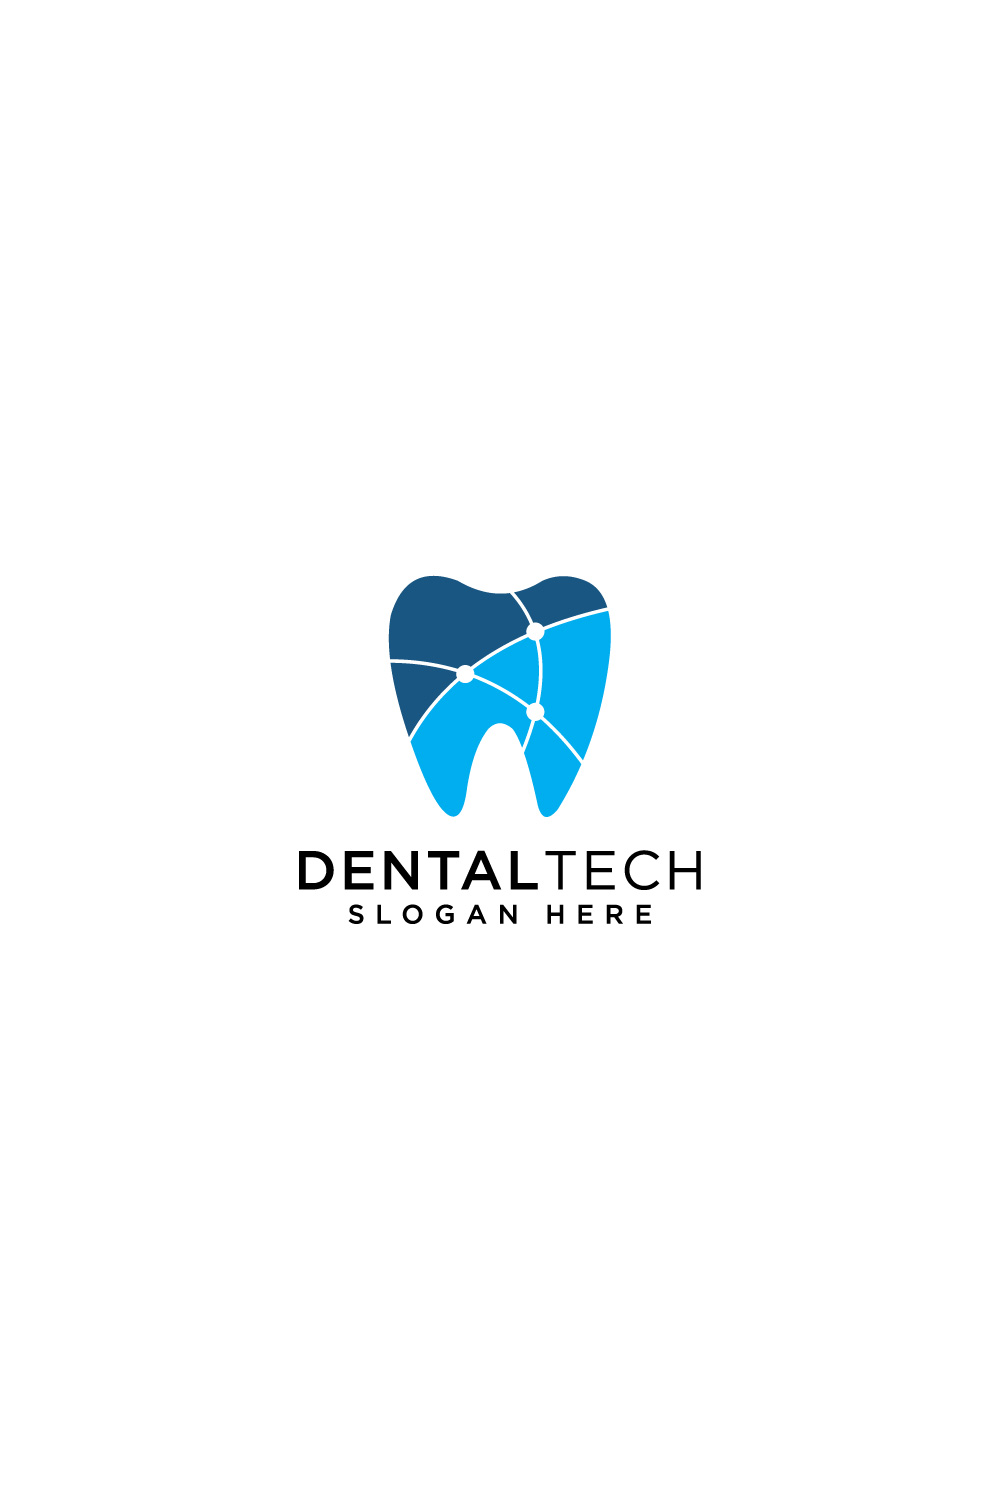 dental technology logo vector design pinterest preview image.